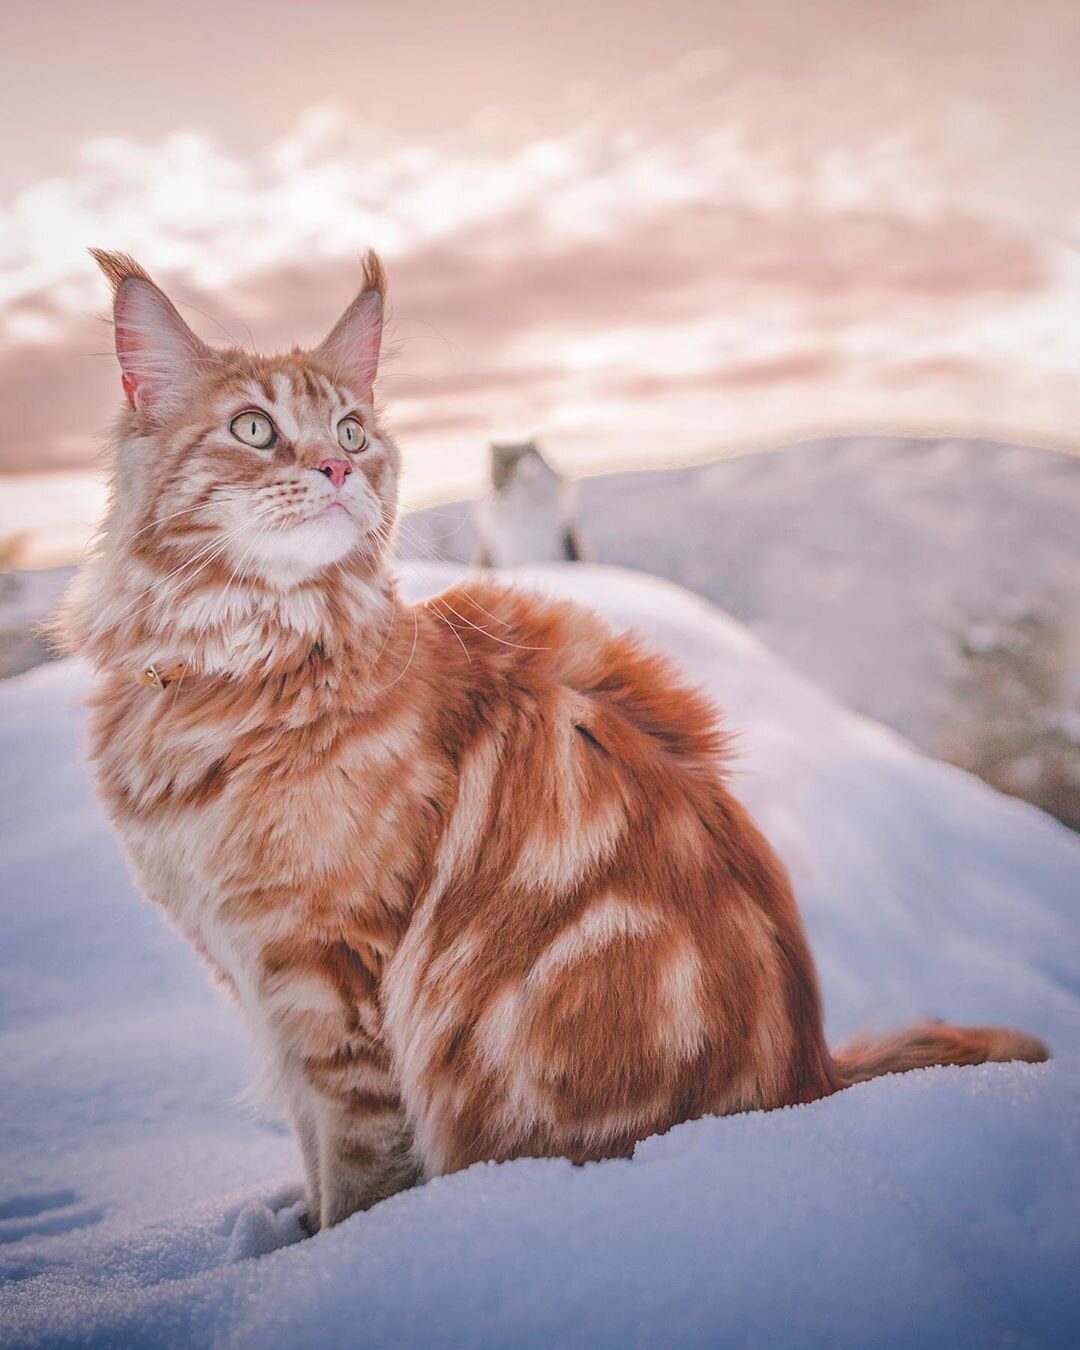 efterklang sammenhængende Sindsro Cat coat: torties, red cats and genetics — The Little Carnivore